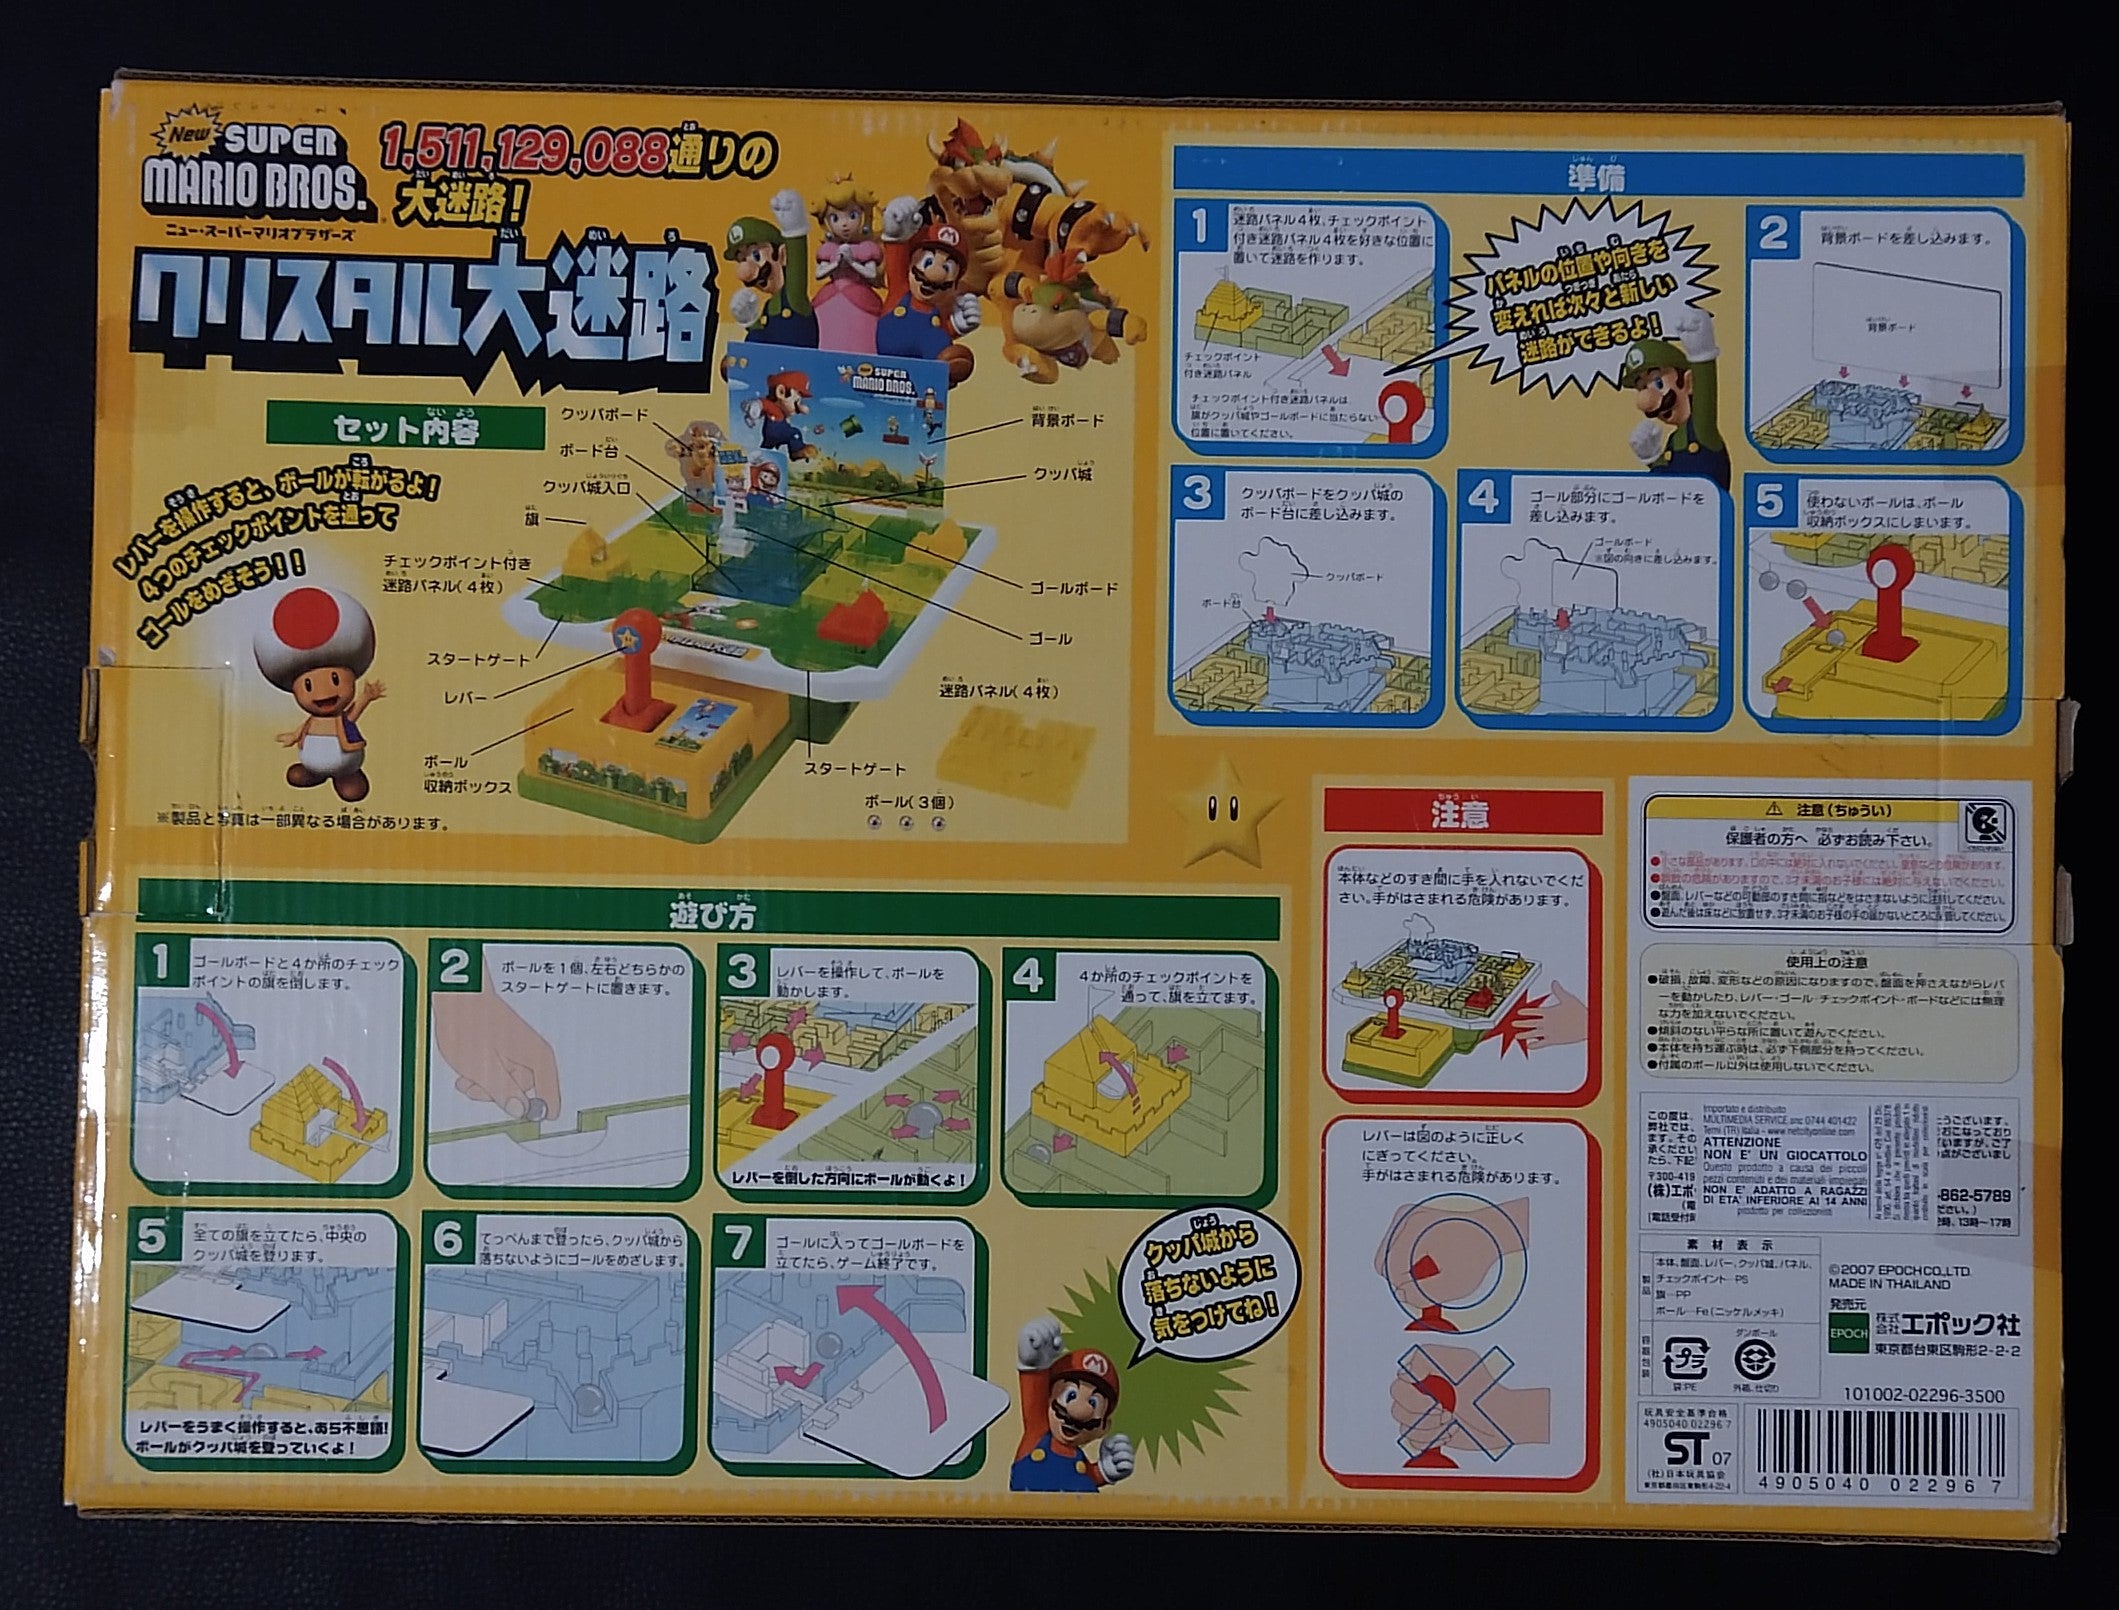 New Super Mario Bros. Crystal Maze Epoch JAP SEALED